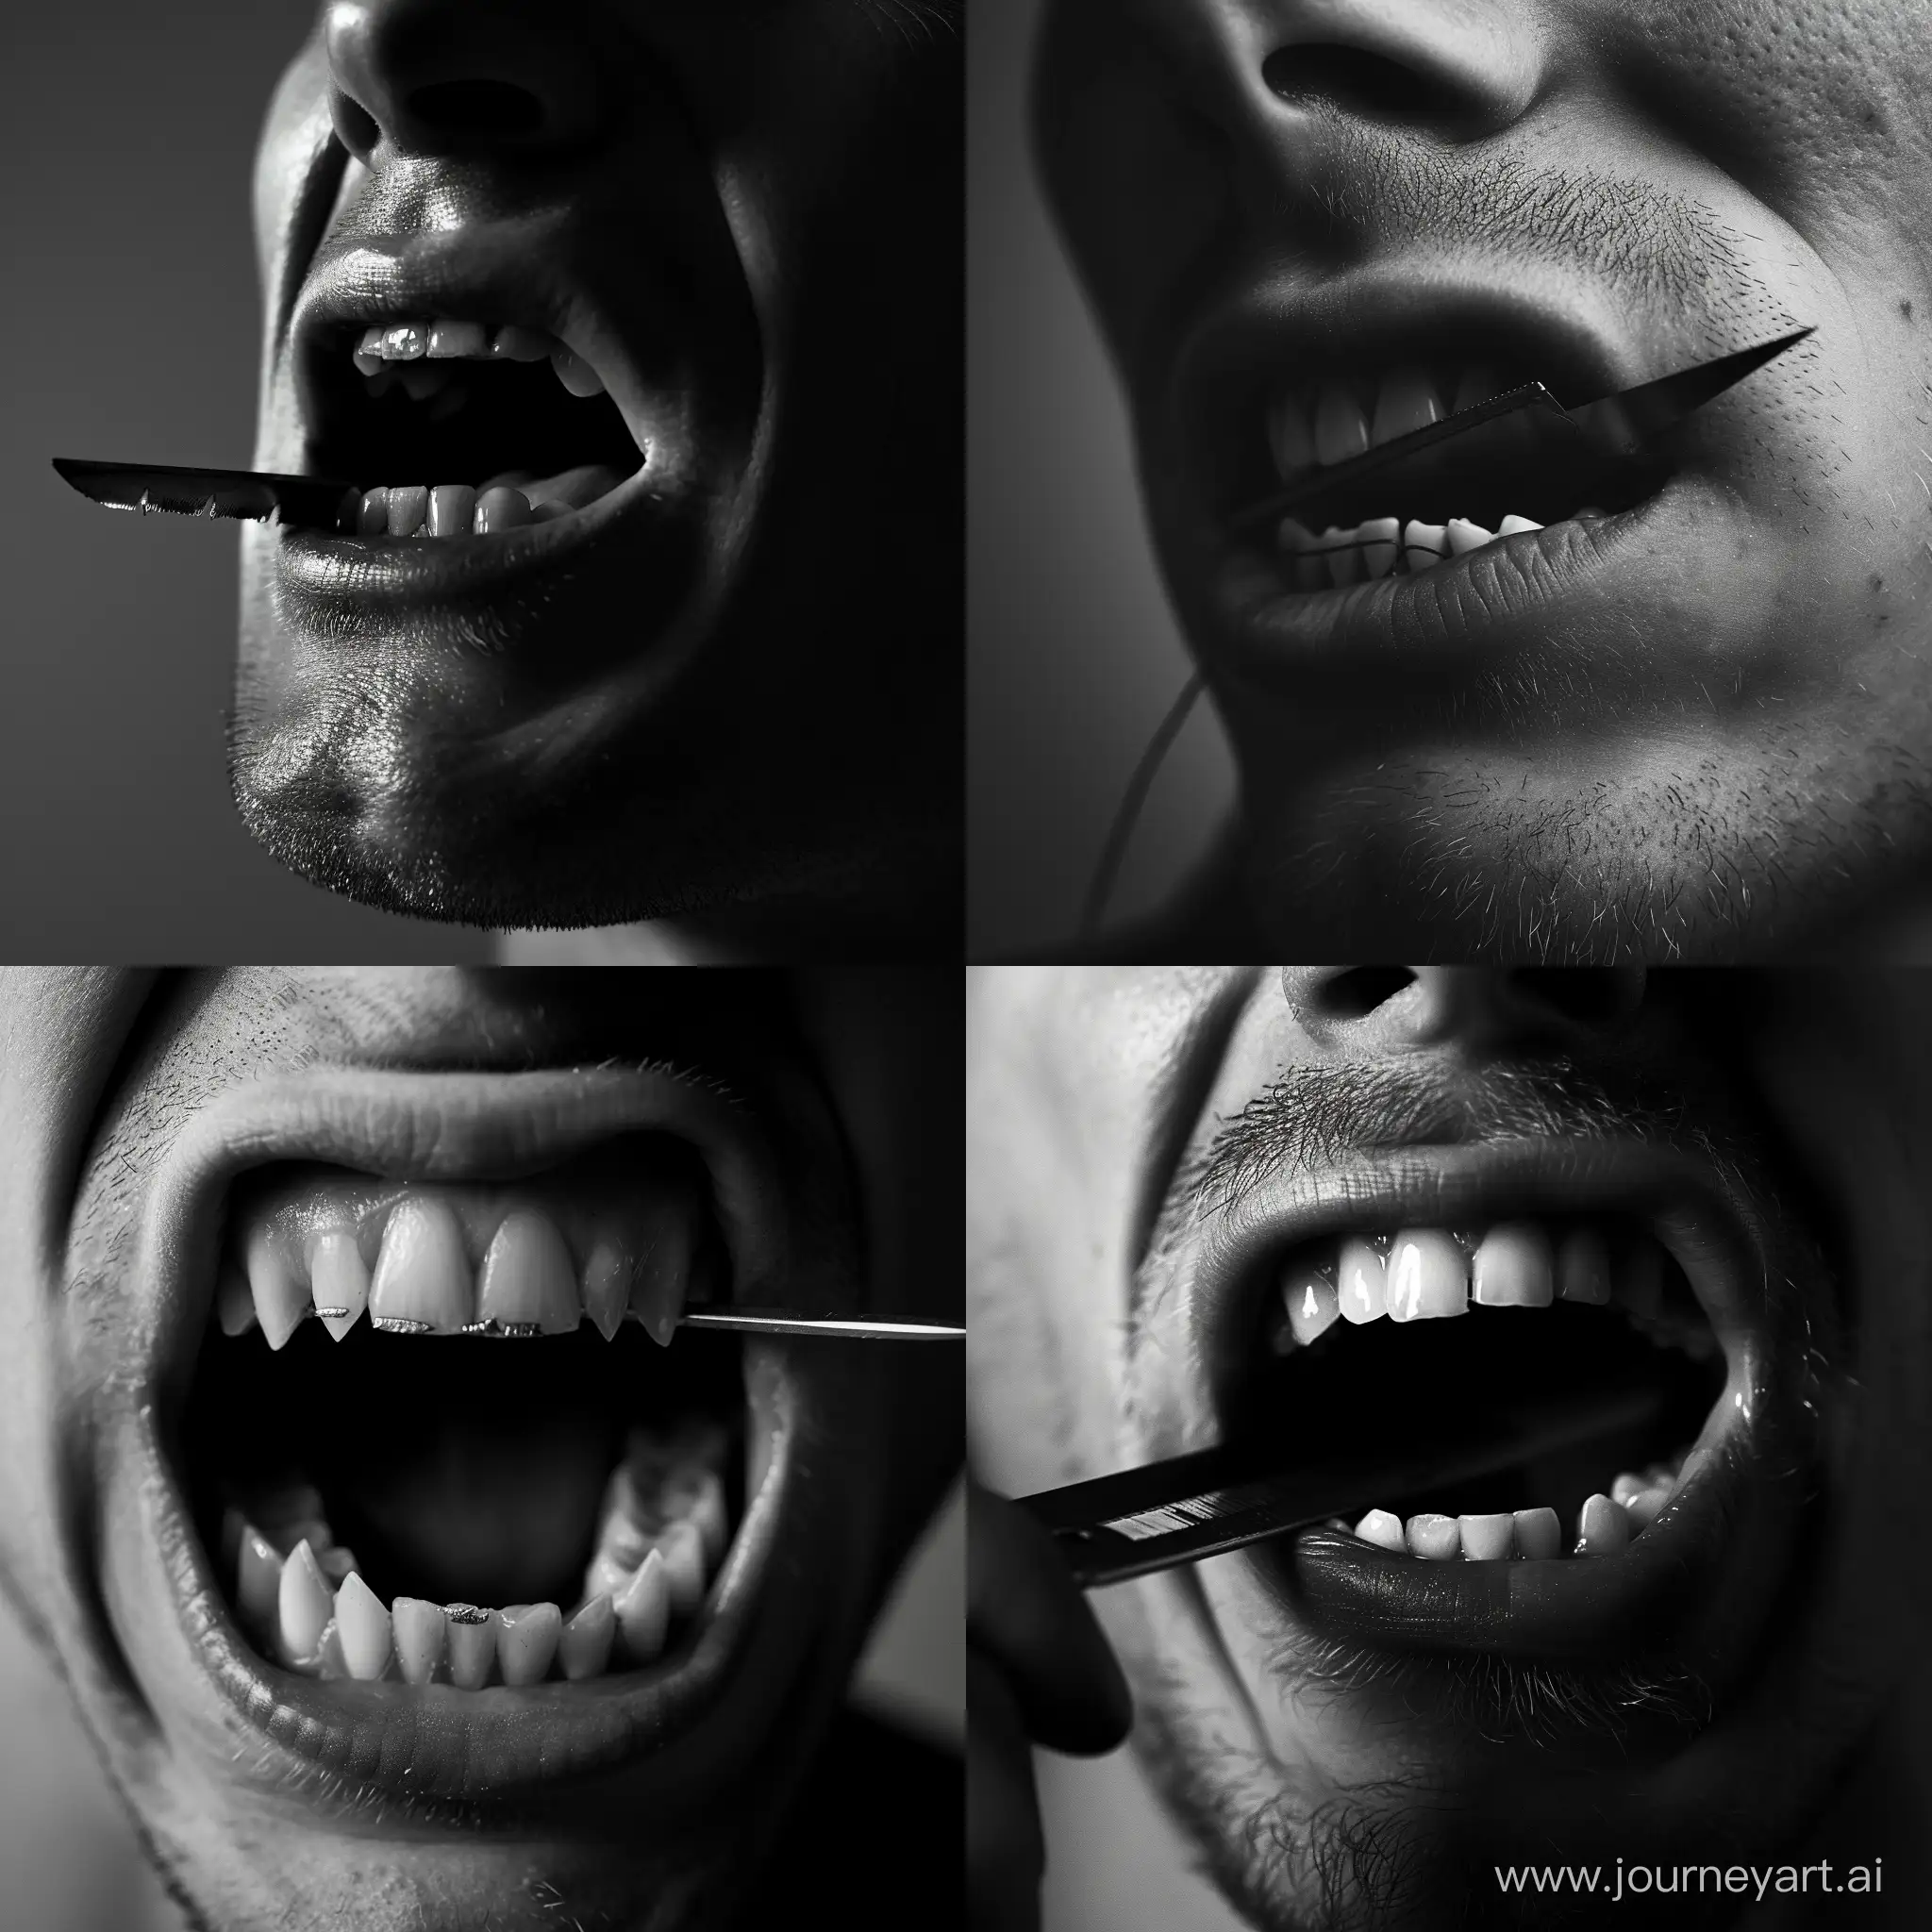 Intense-Monochrome-Portrait-Man-with-Razor-Blade-Between-Teeth